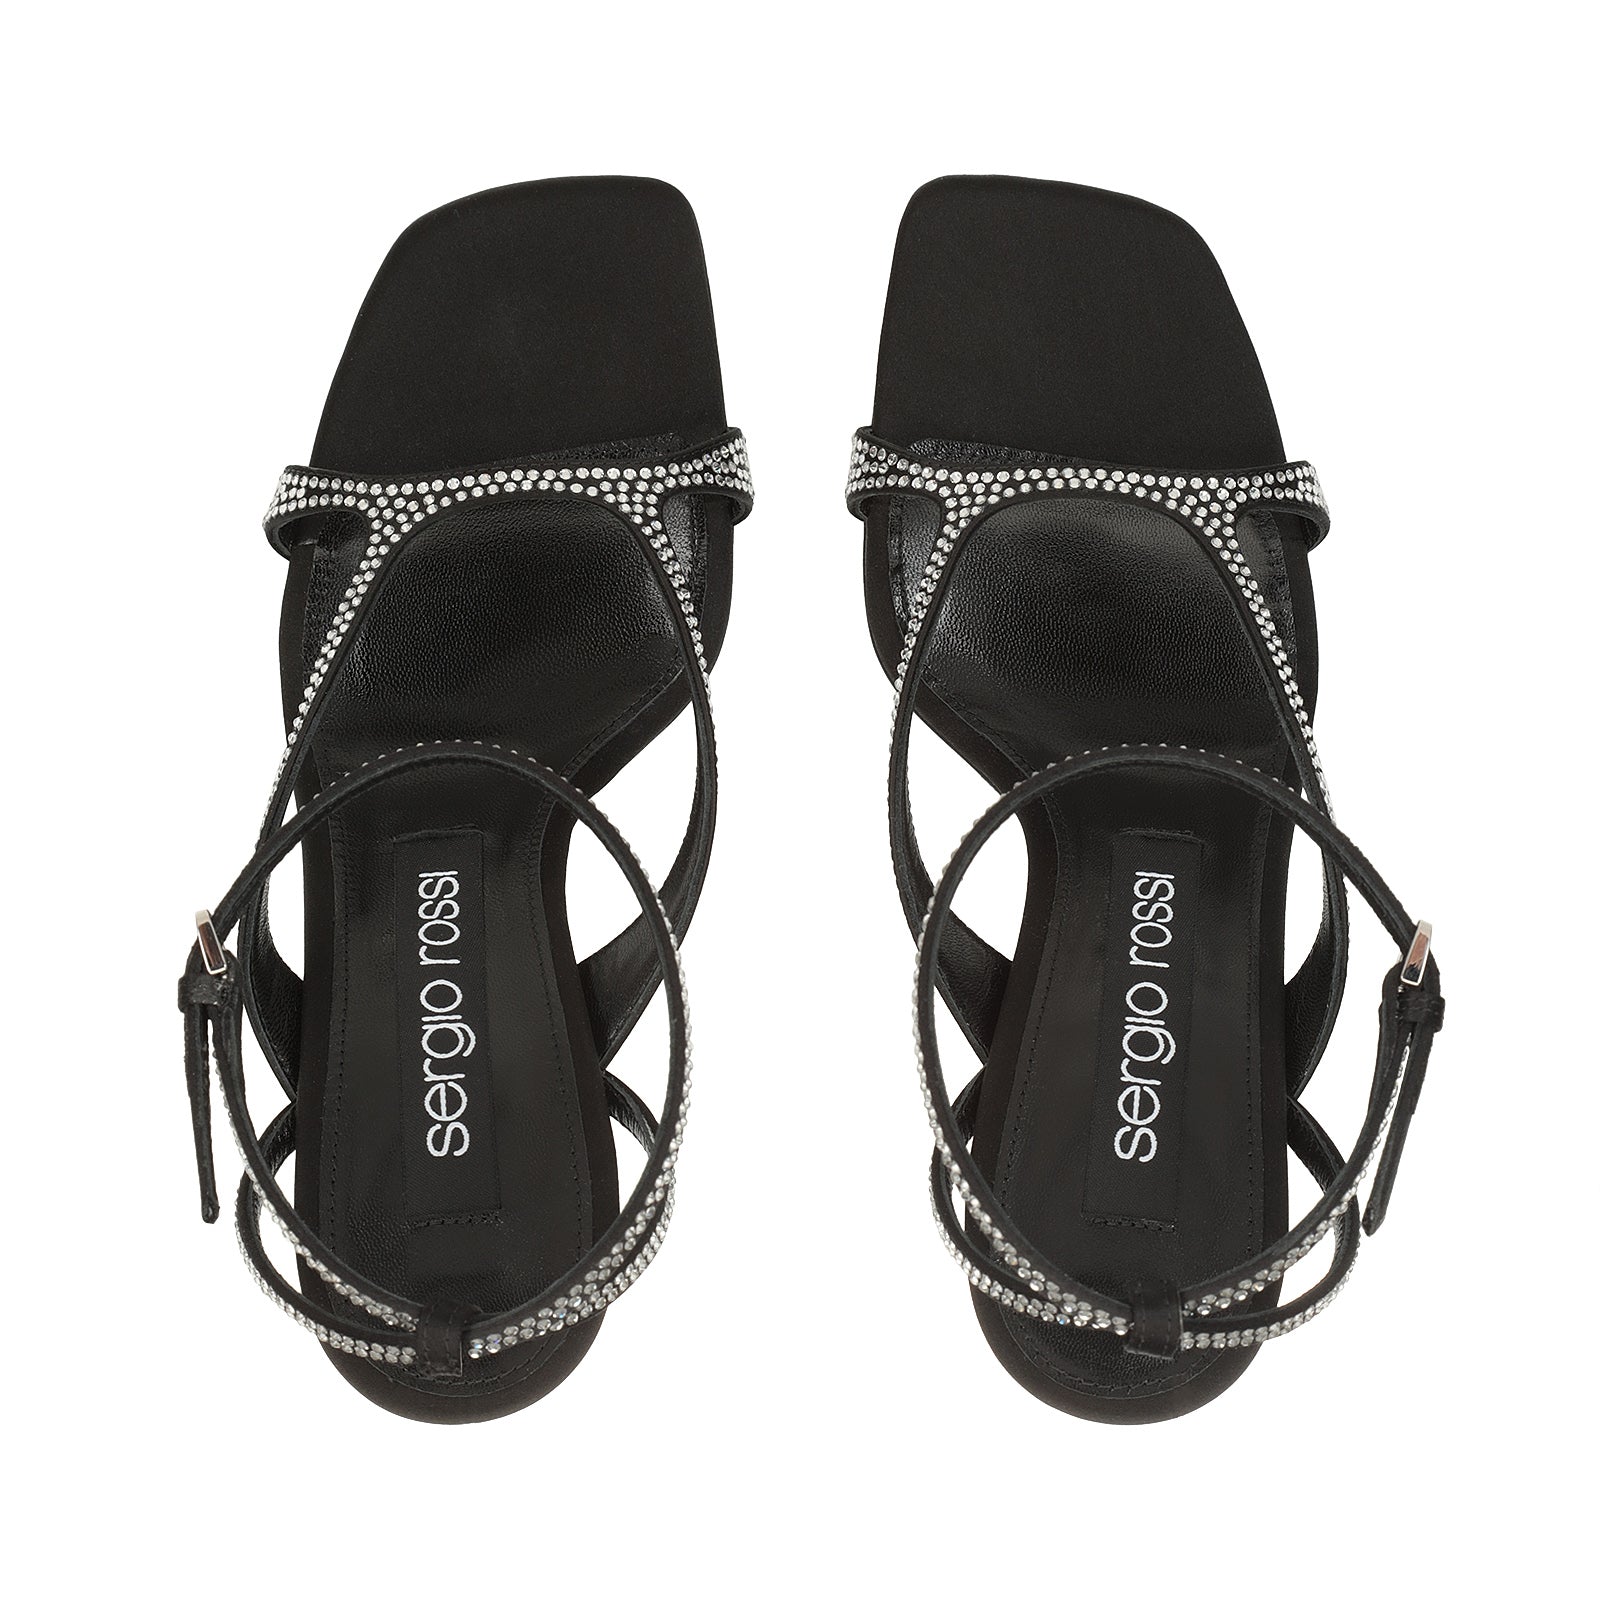 Sr Aracne 95 heeled sandals - Nero & Crystal